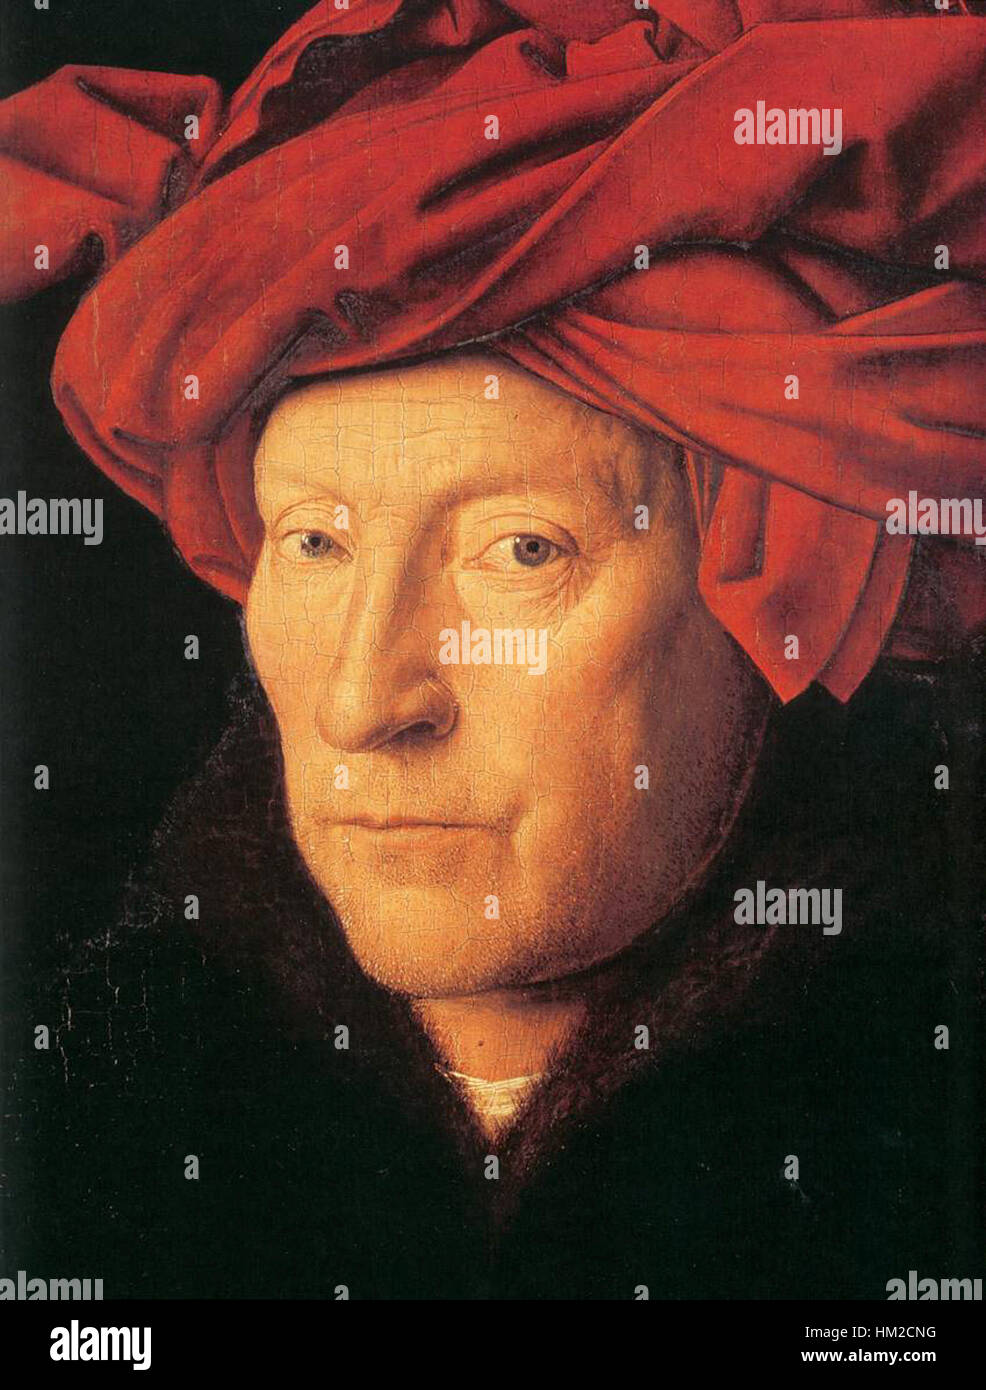 Jan van Eyck - Man in a Turban (detail) - WGA7598 Stock Photo - Alamy